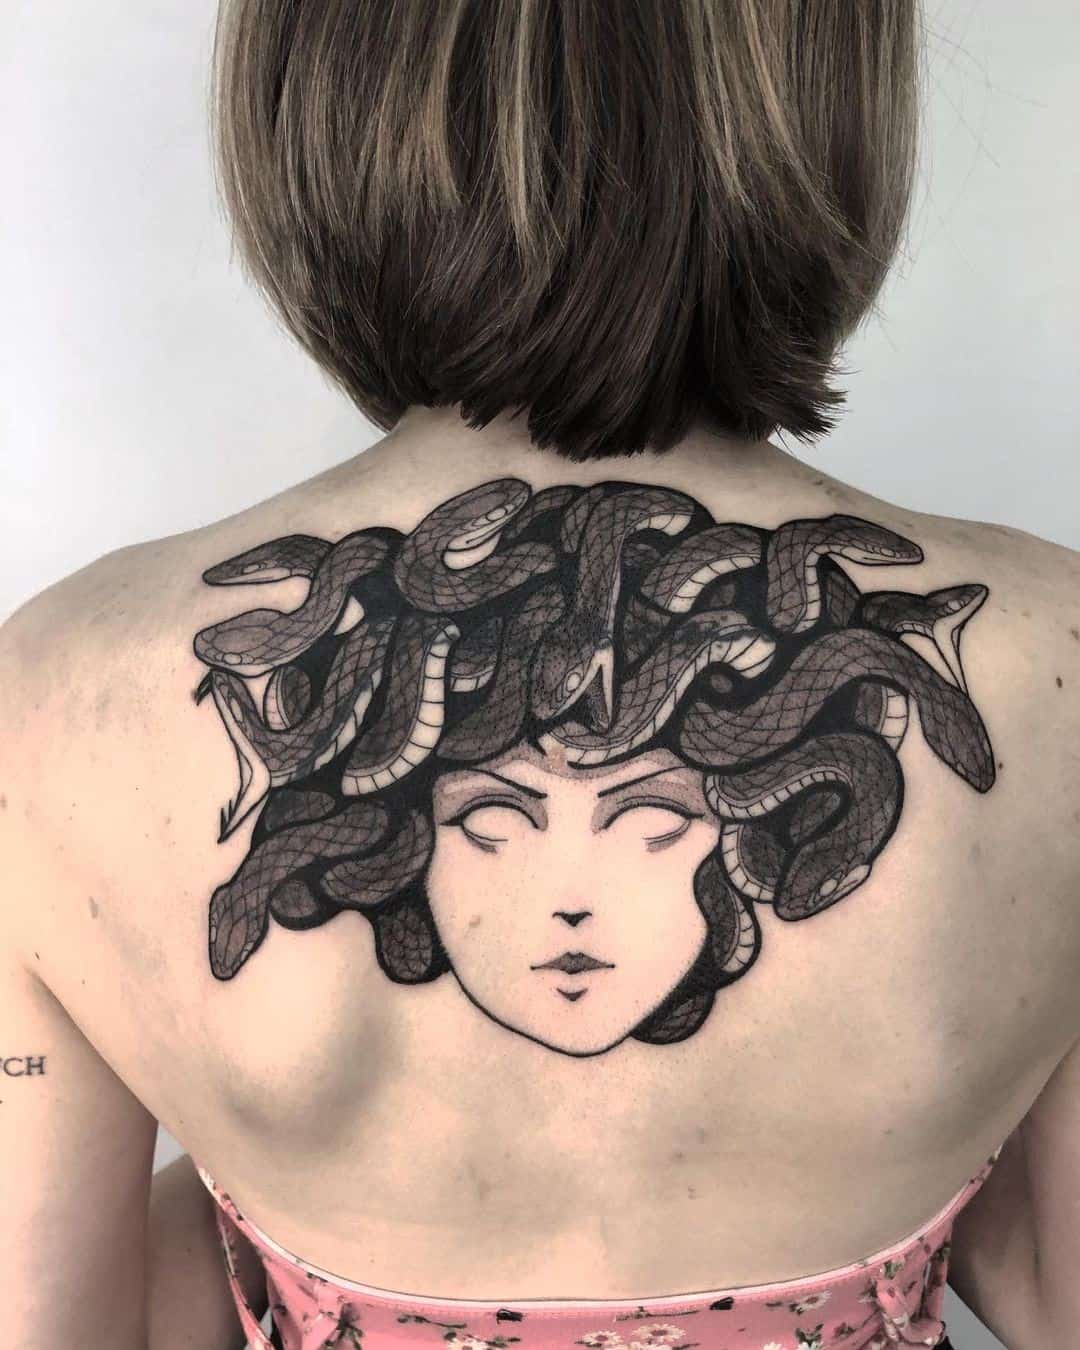 Other Medusa Tattoo Designs 5